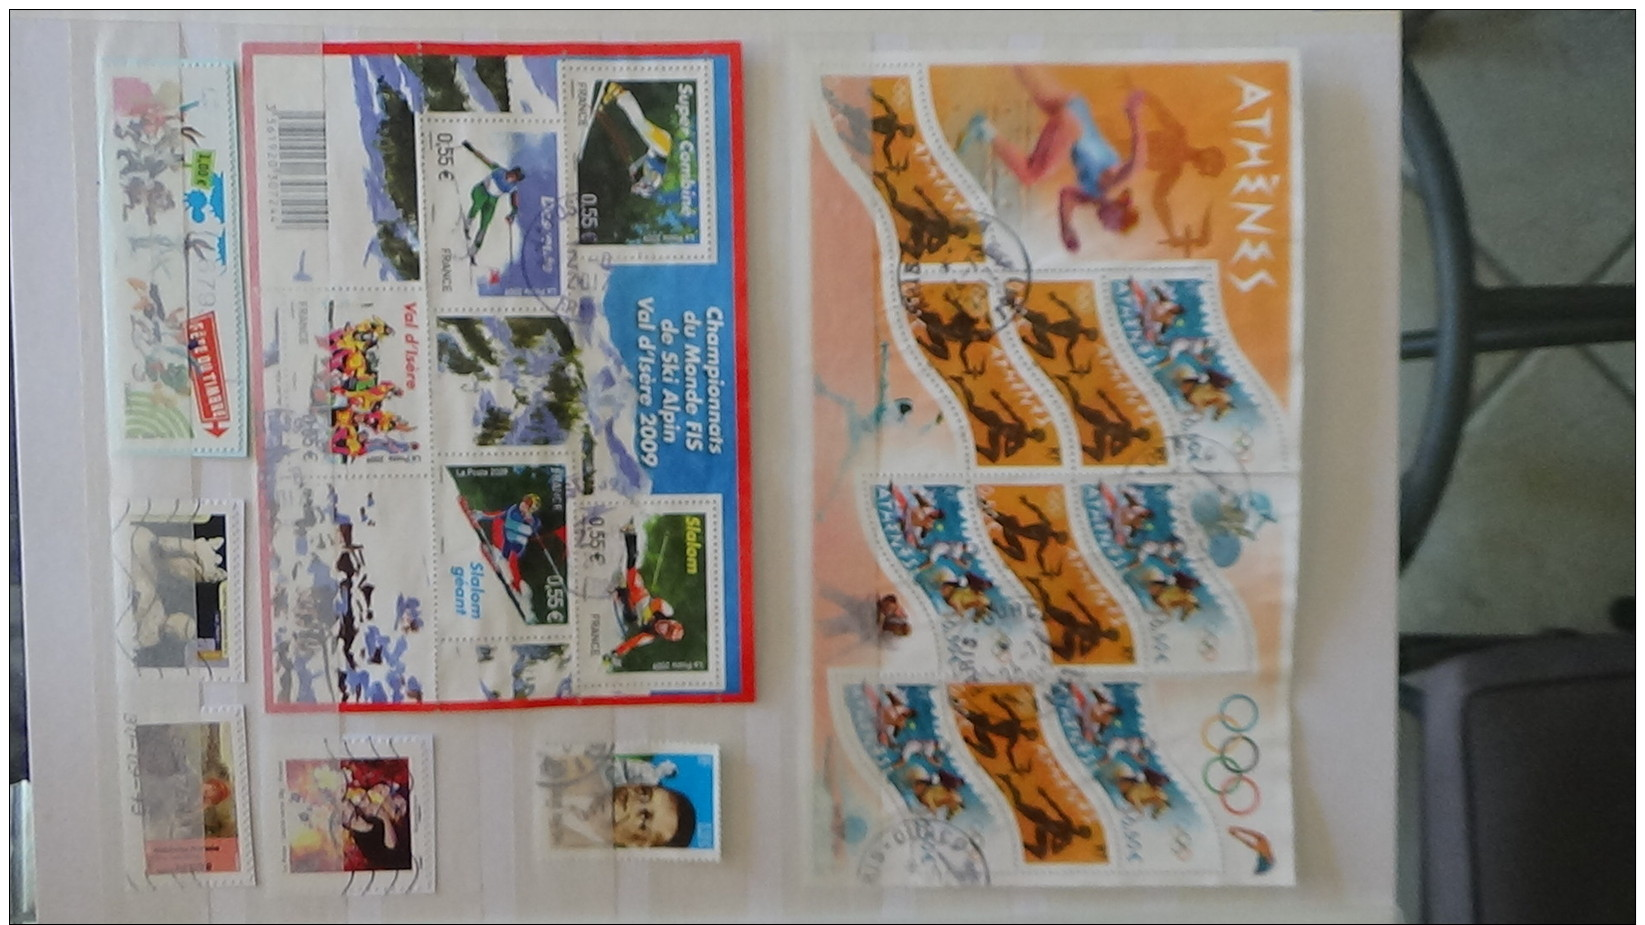 C Album de timbres et blocs de France uniquement en euros. A saisir